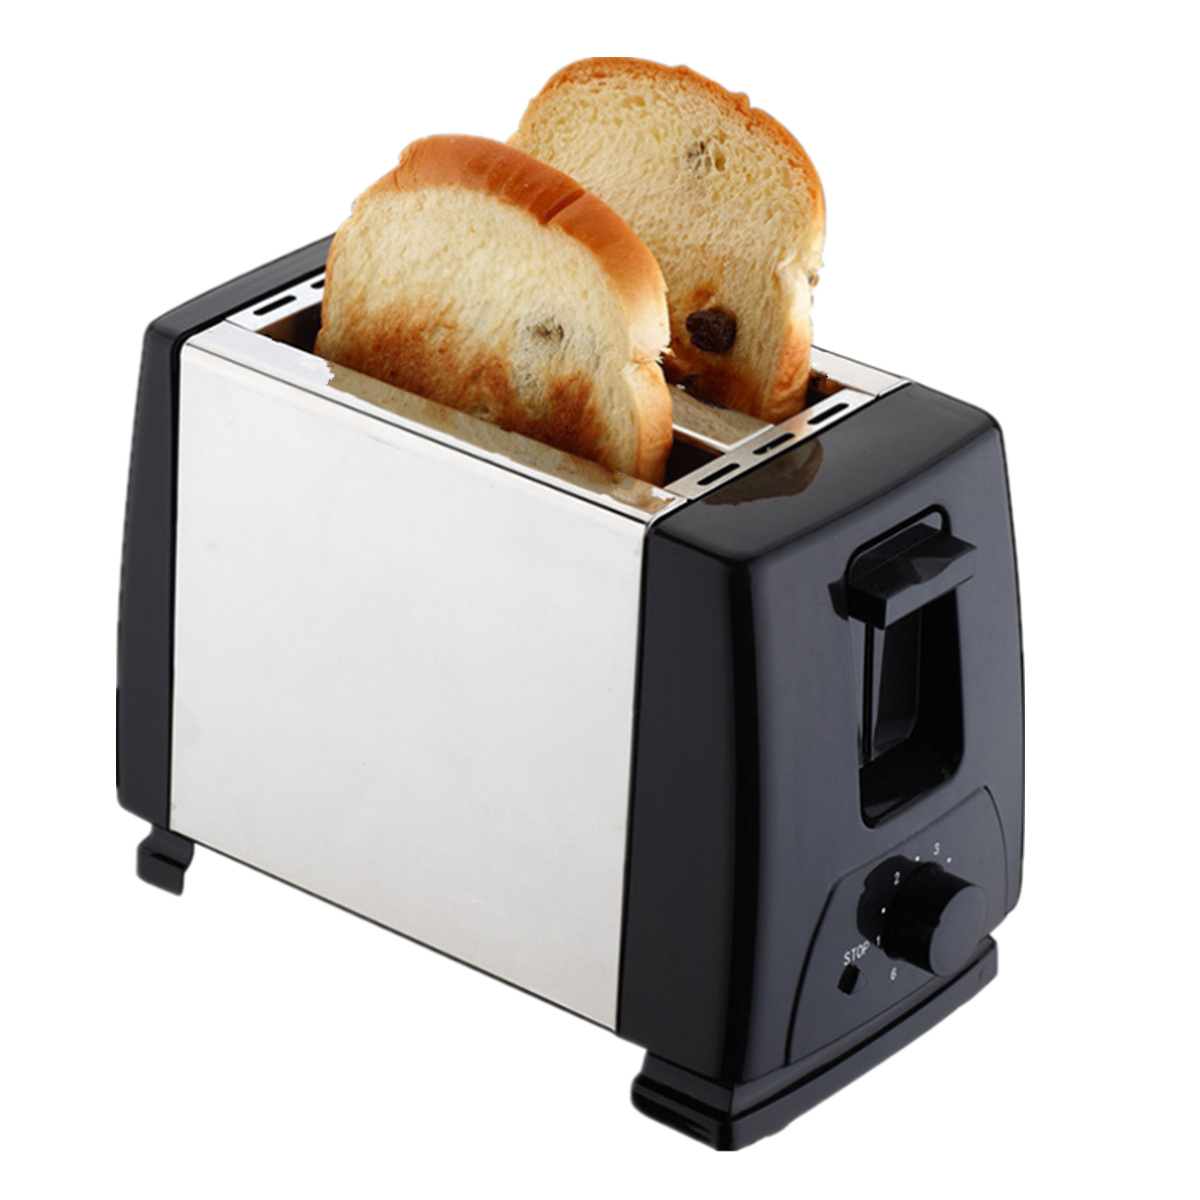 L537 Elektro doppel Kontaktgrill Toaster Sandwich grill Toast maschine Toastmasc 